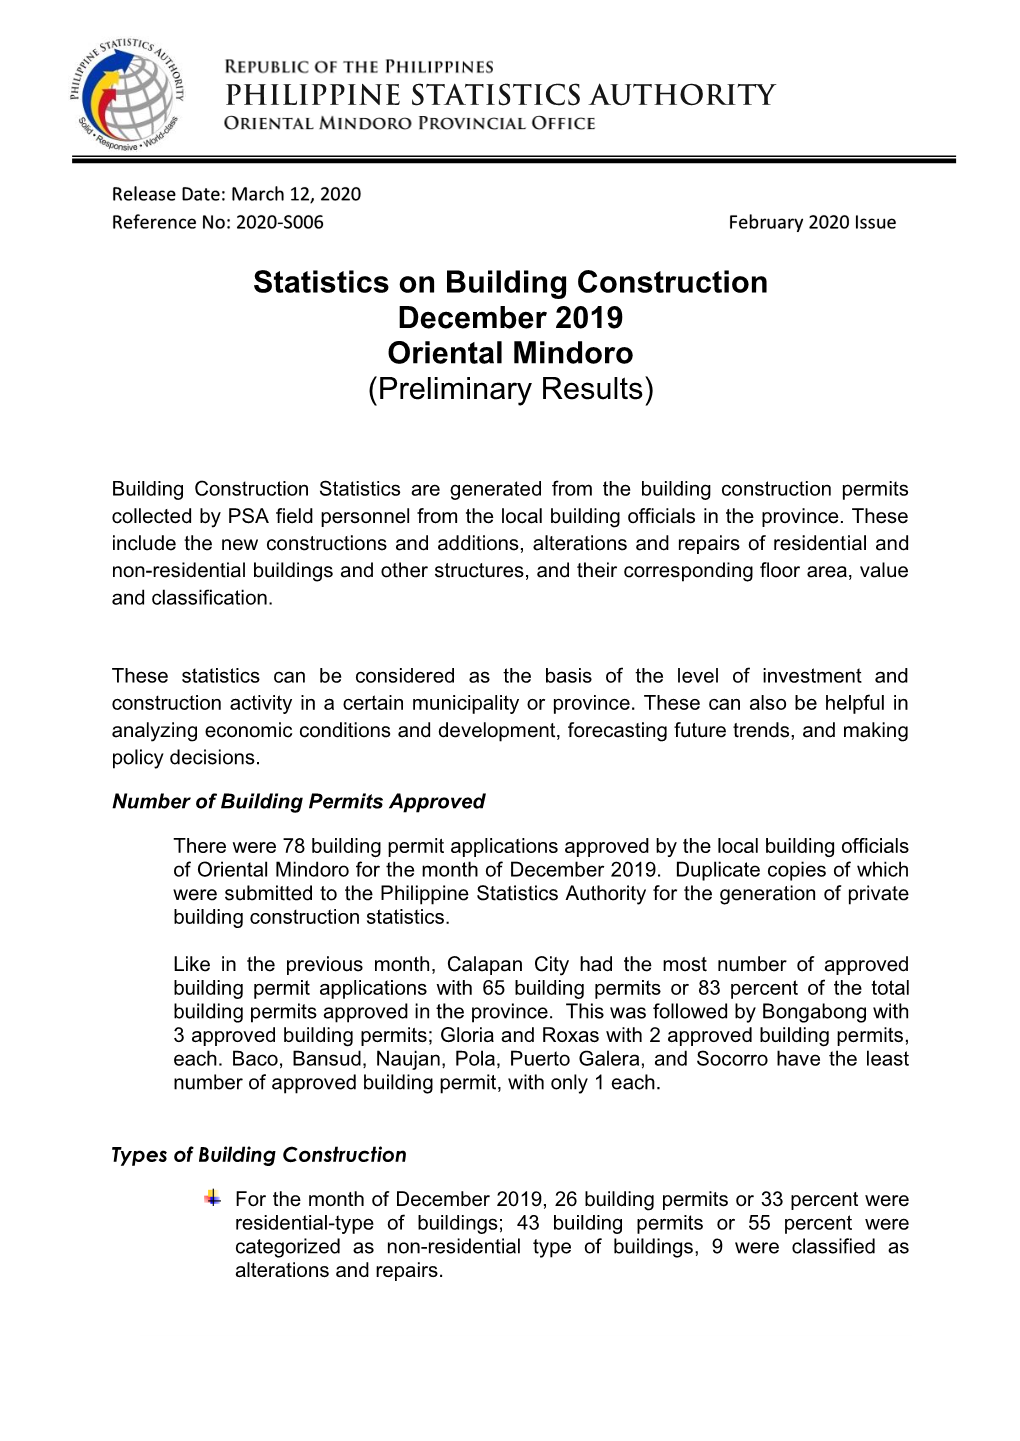 Statistics on Building Construction December 2019 Oriental Mindoro (Preliminary Results)